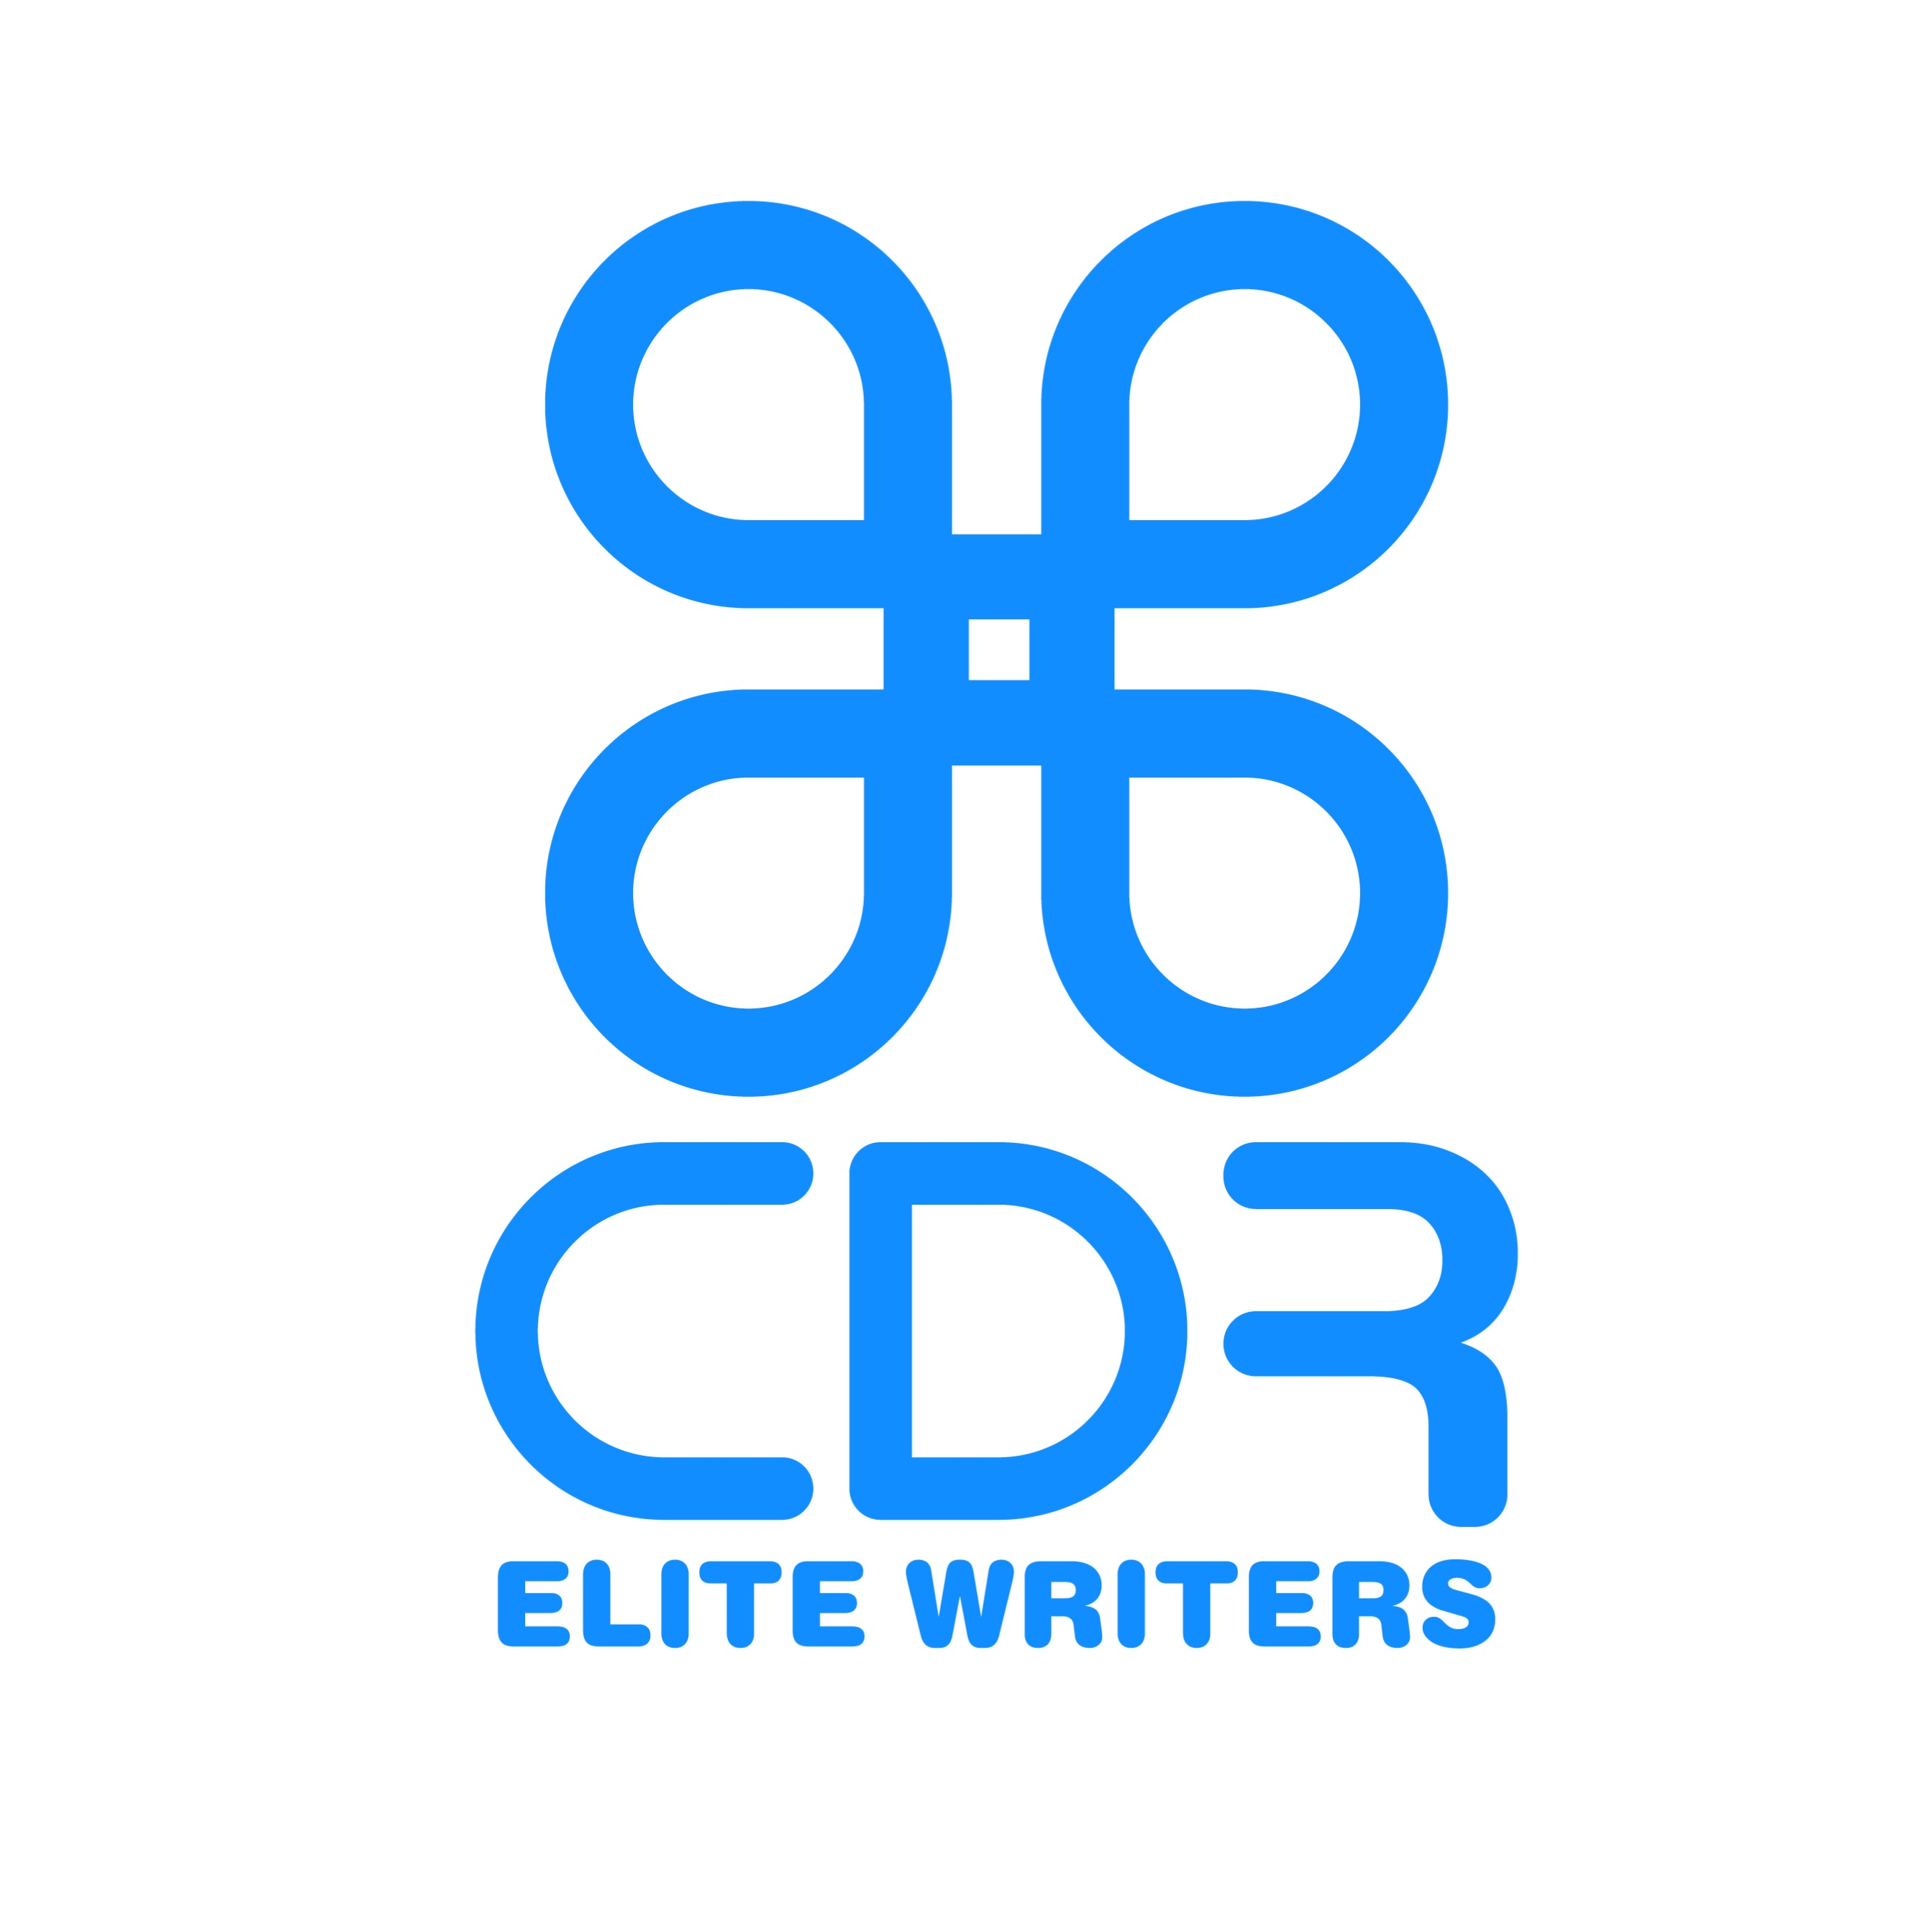 CDR Elite Writers Logo